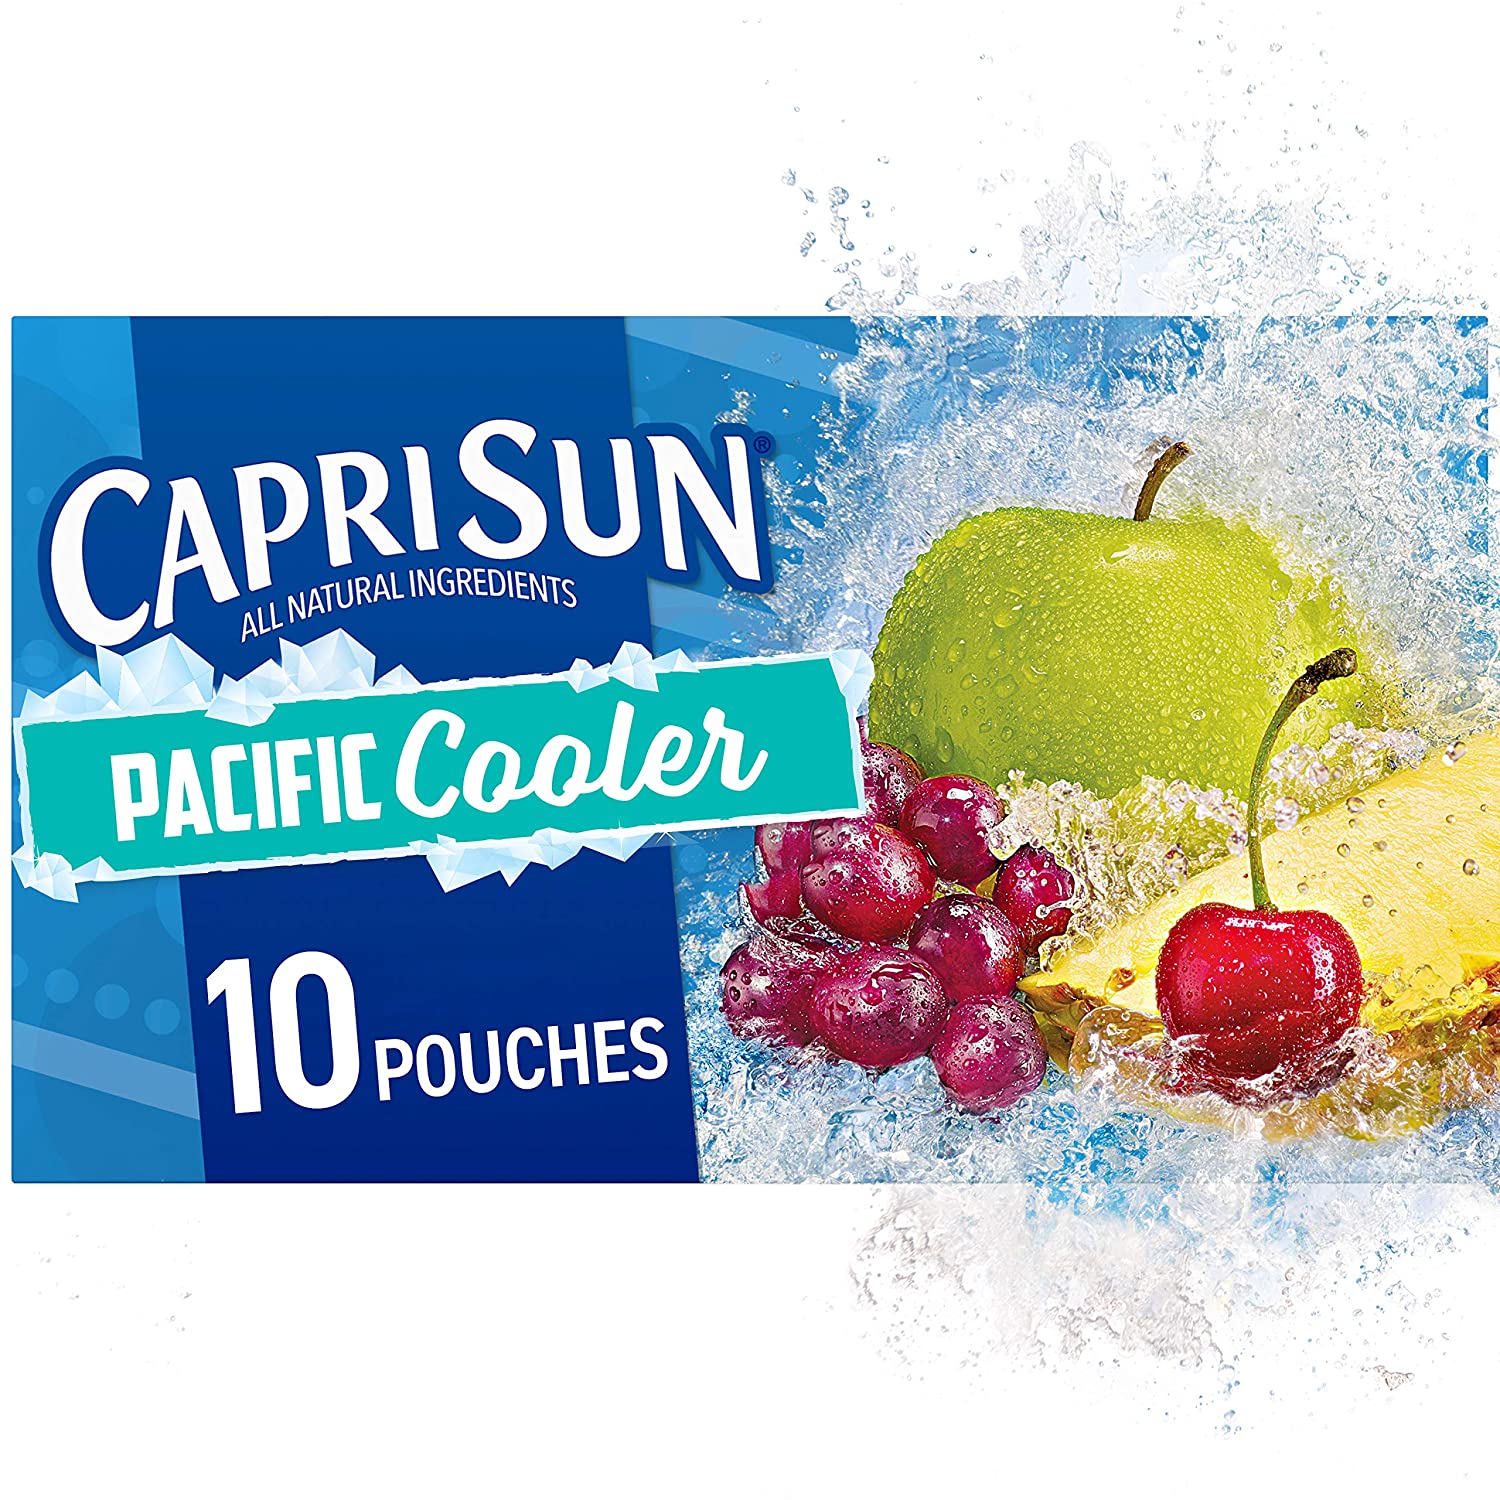 Amazon Lowest Price: Capri Sun Pacific Cooler Ready-to-Drink Juice (10 Pouc...